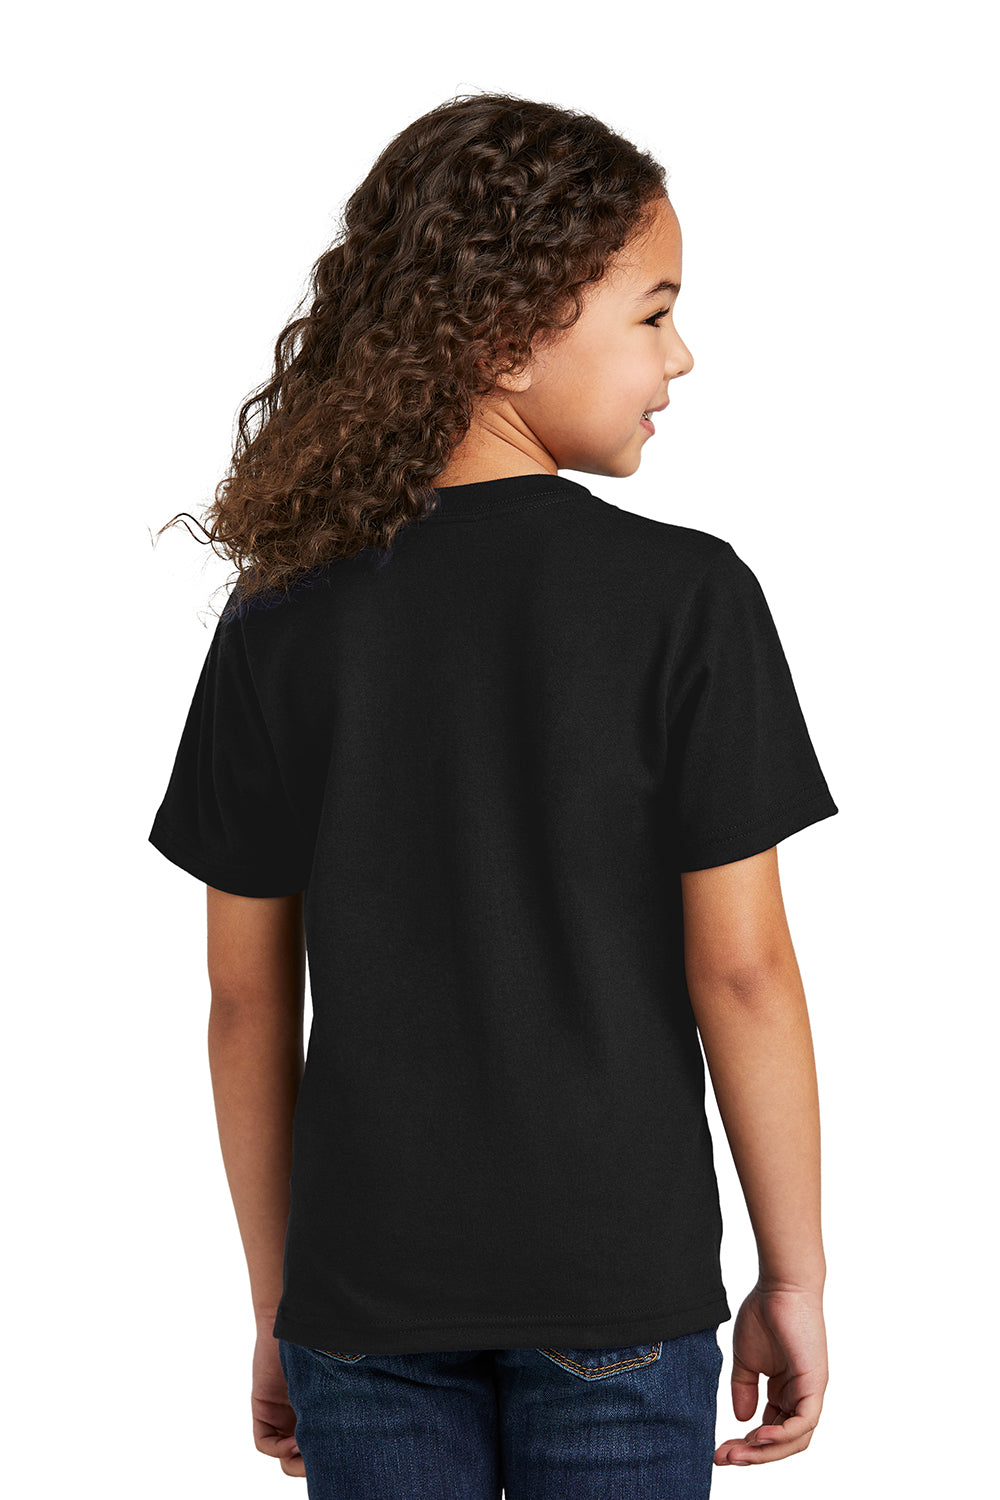 Port & Company PC330Y Youth Short Sleeve Crewneck T-Shirt Black Back